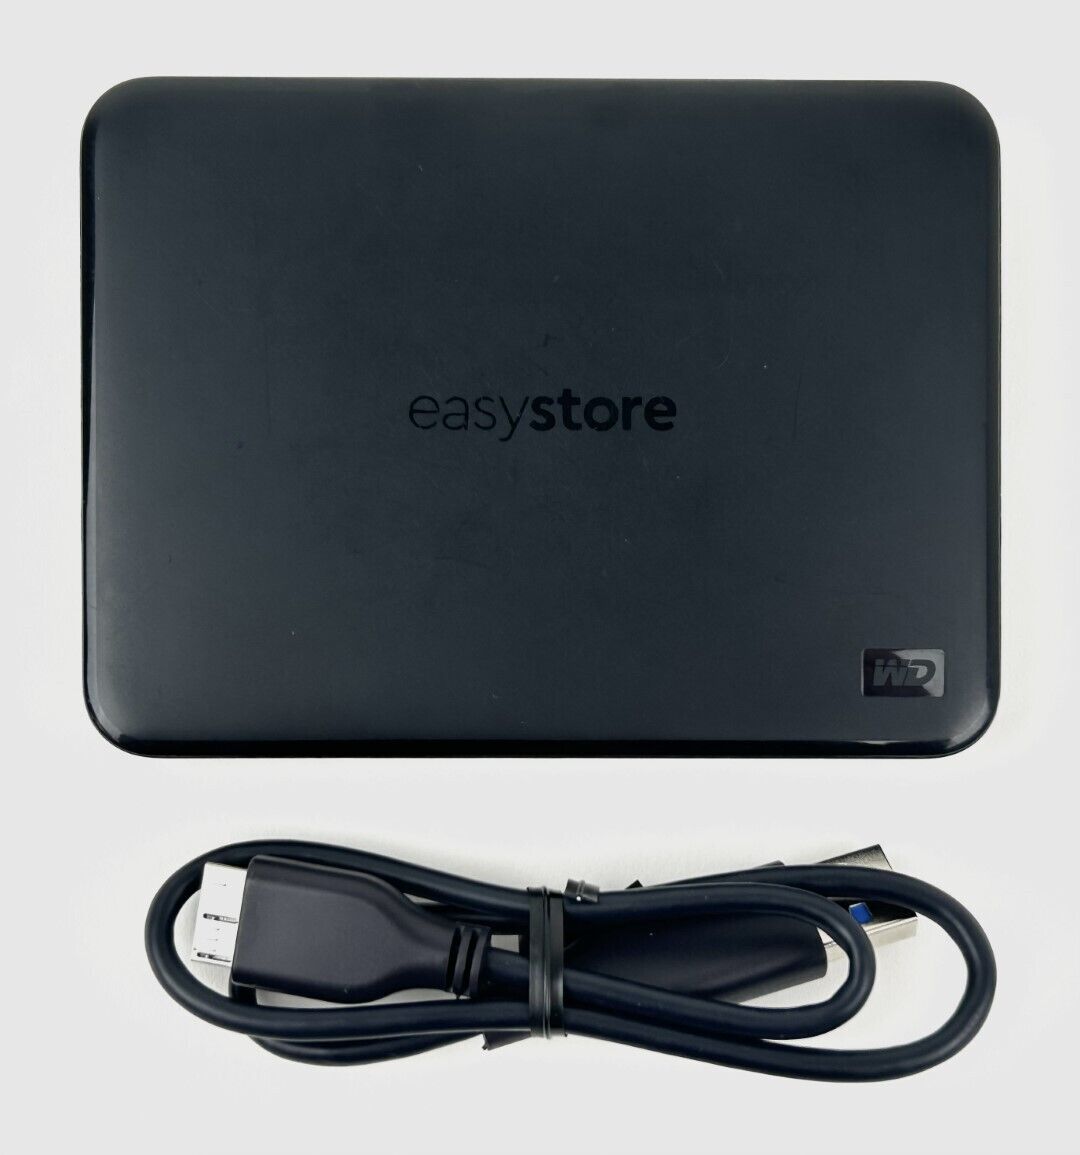 WD Easystore 2TB External USB 3.0 Portable Hard Drive - Black - U